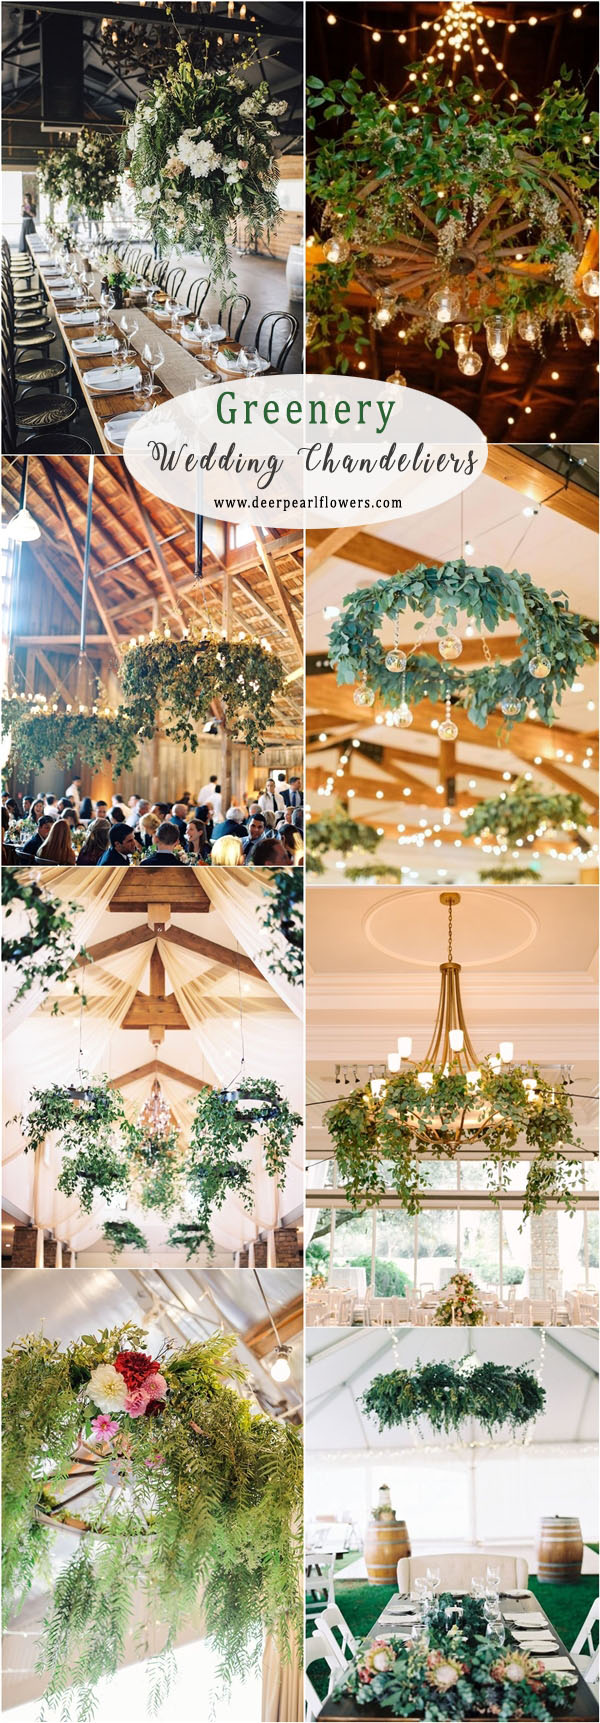 greenery wedding chandelier decor ideas